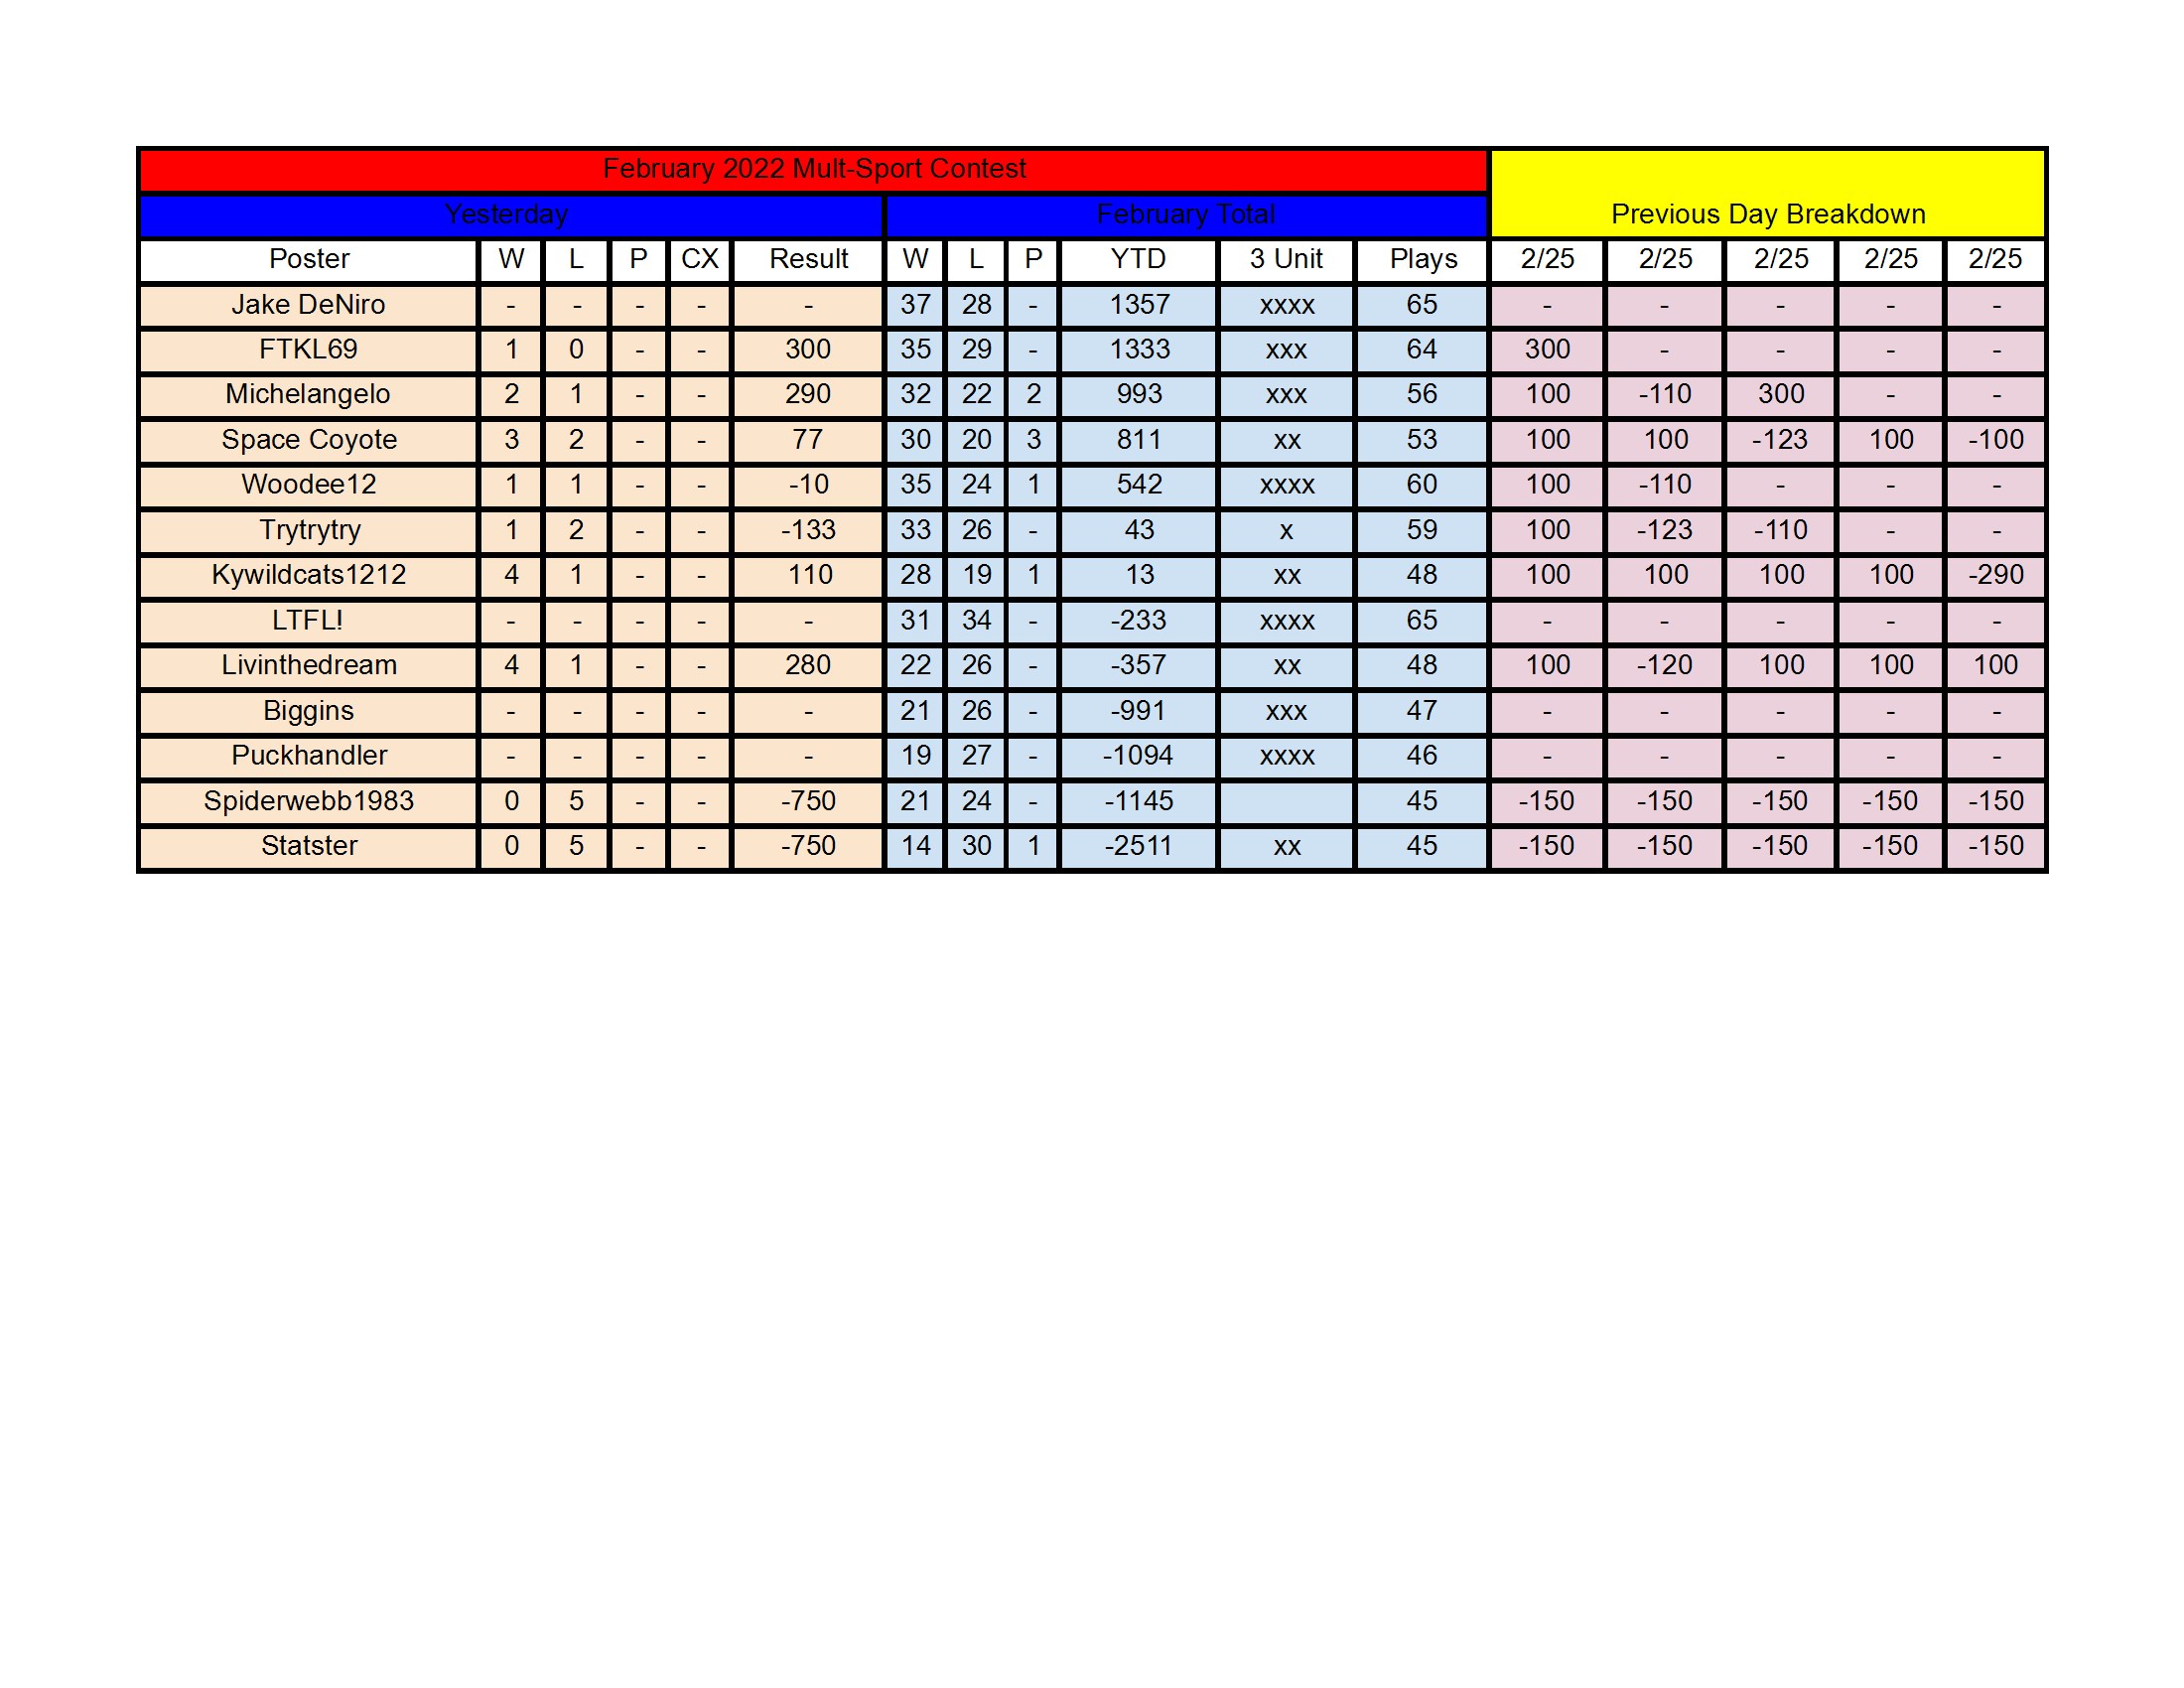 February Standings - 2_25 conv 1.jpeg